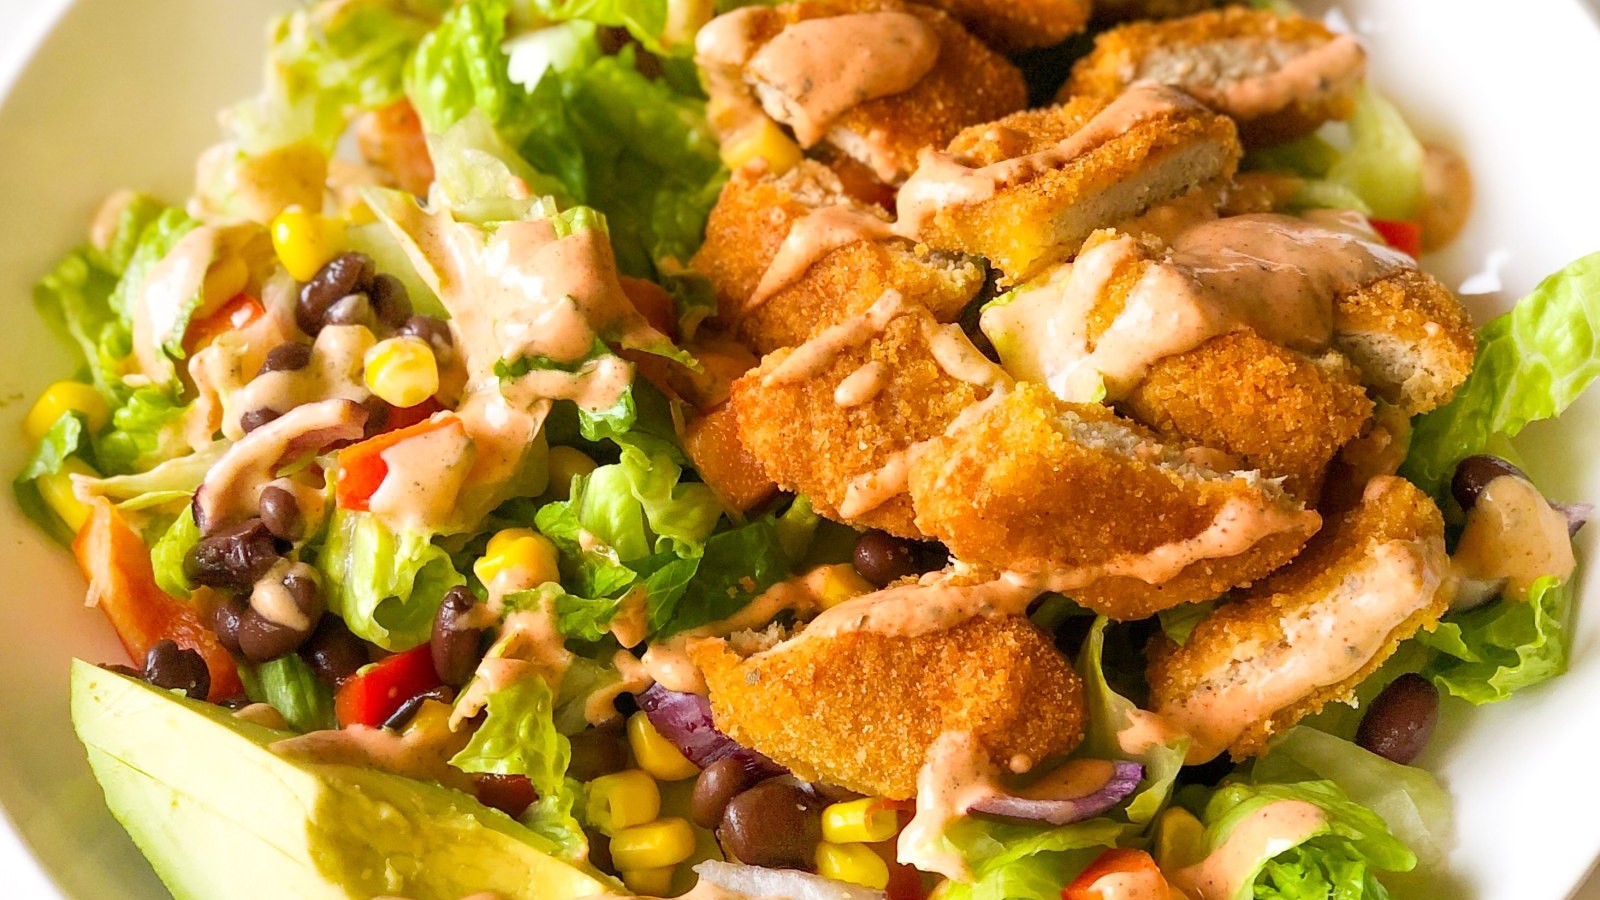 Image of Southwestern Chicken Salad